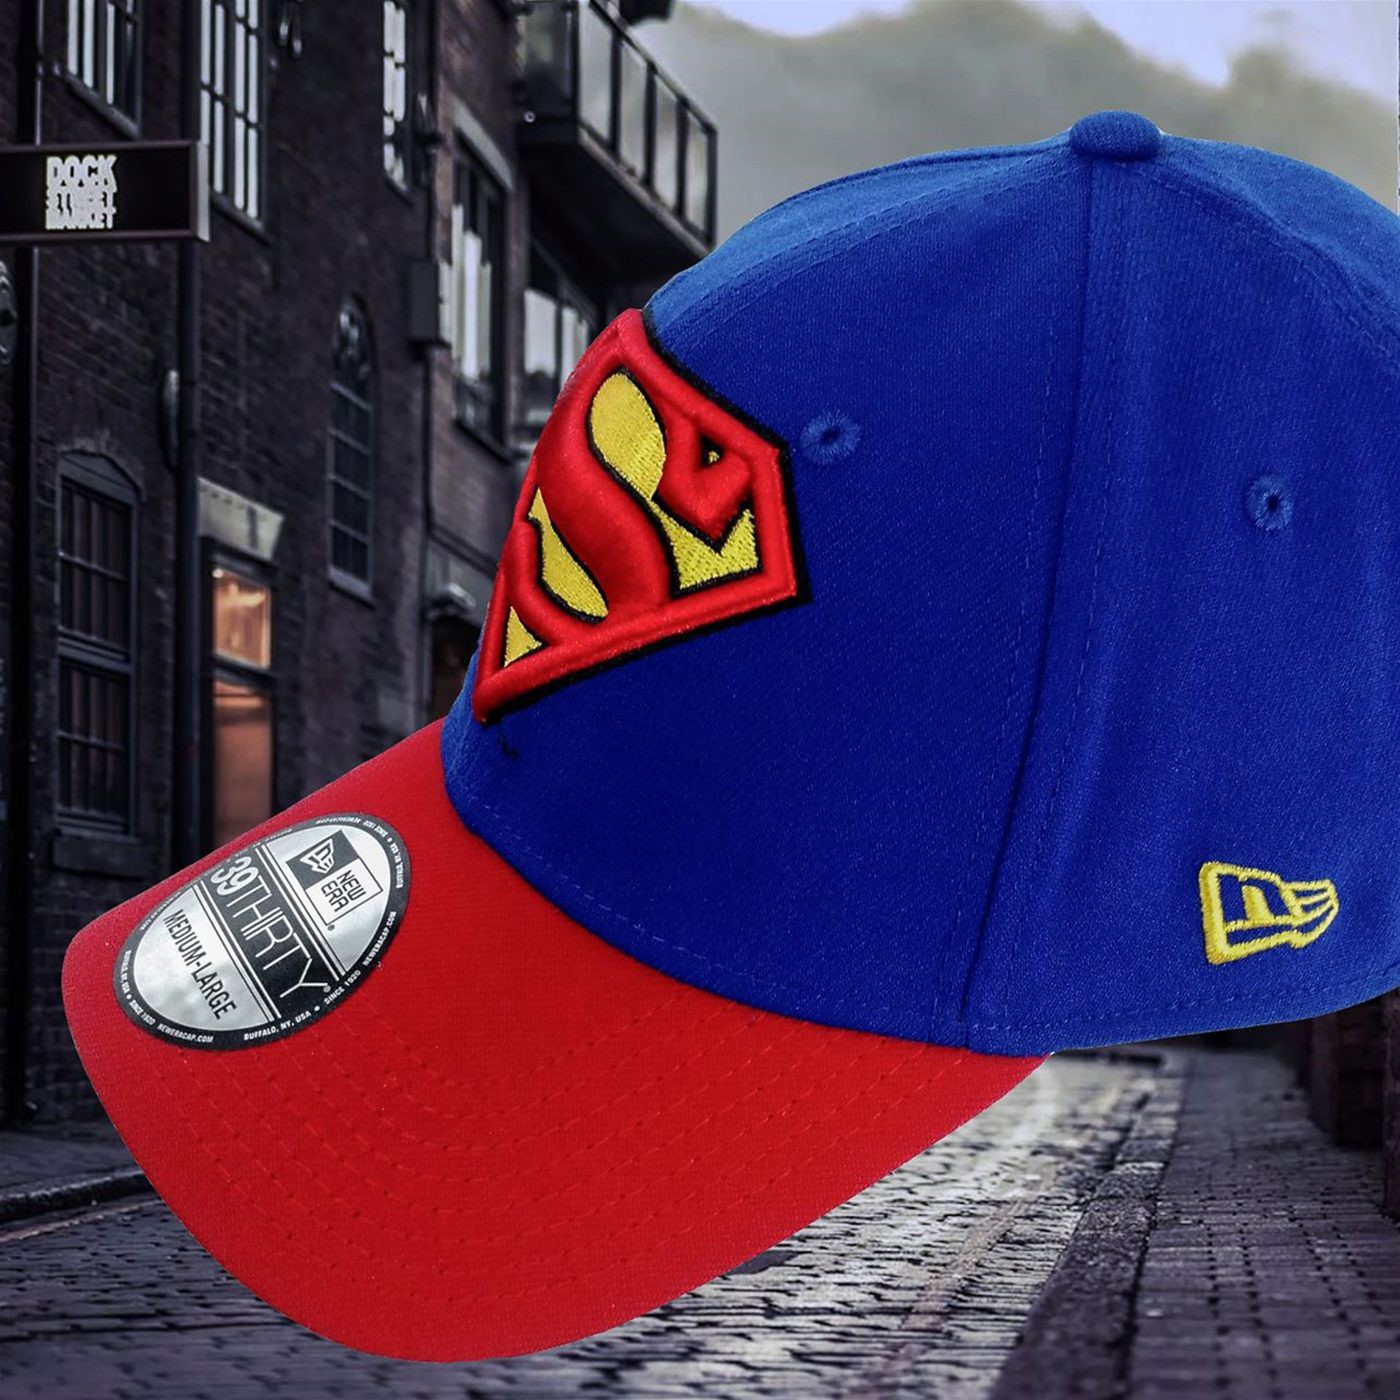 Superman Symbol 9Twenty Adjustable Hat